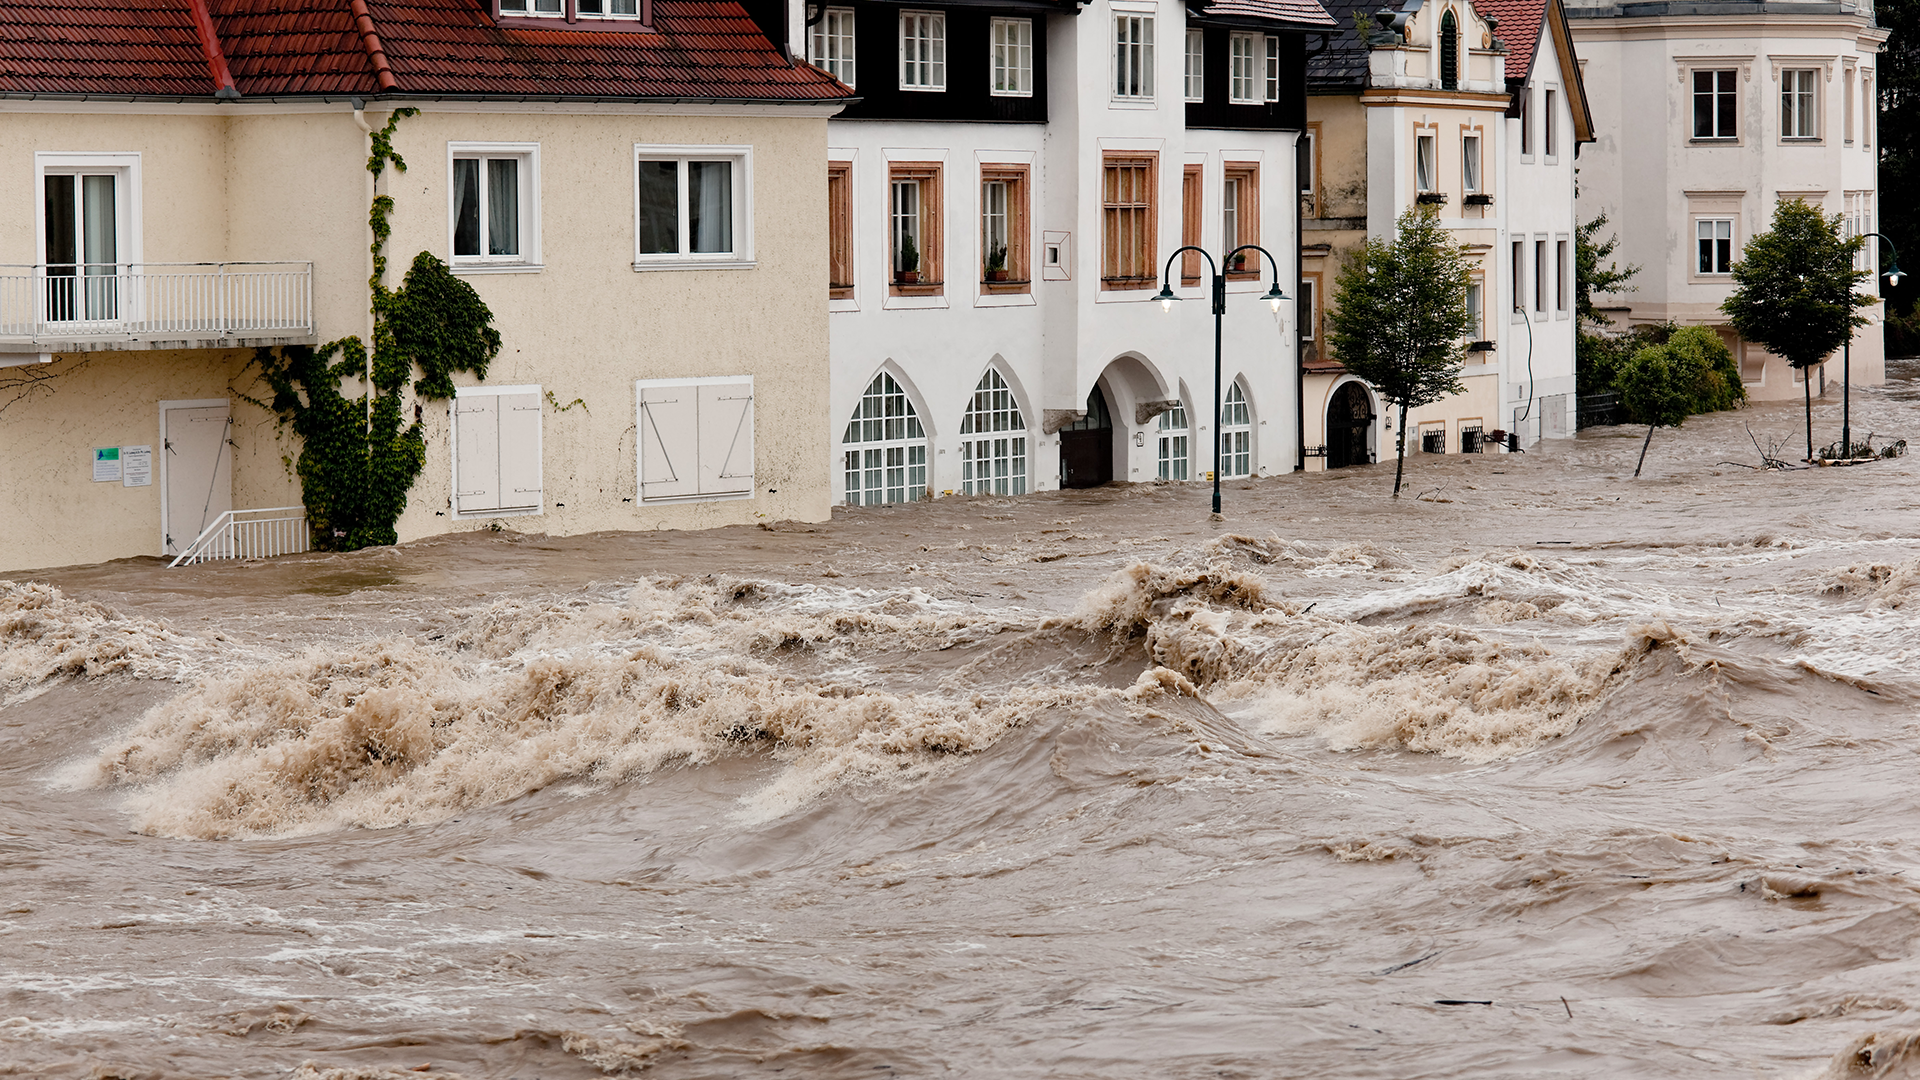 City flooding. Photo: coloubox